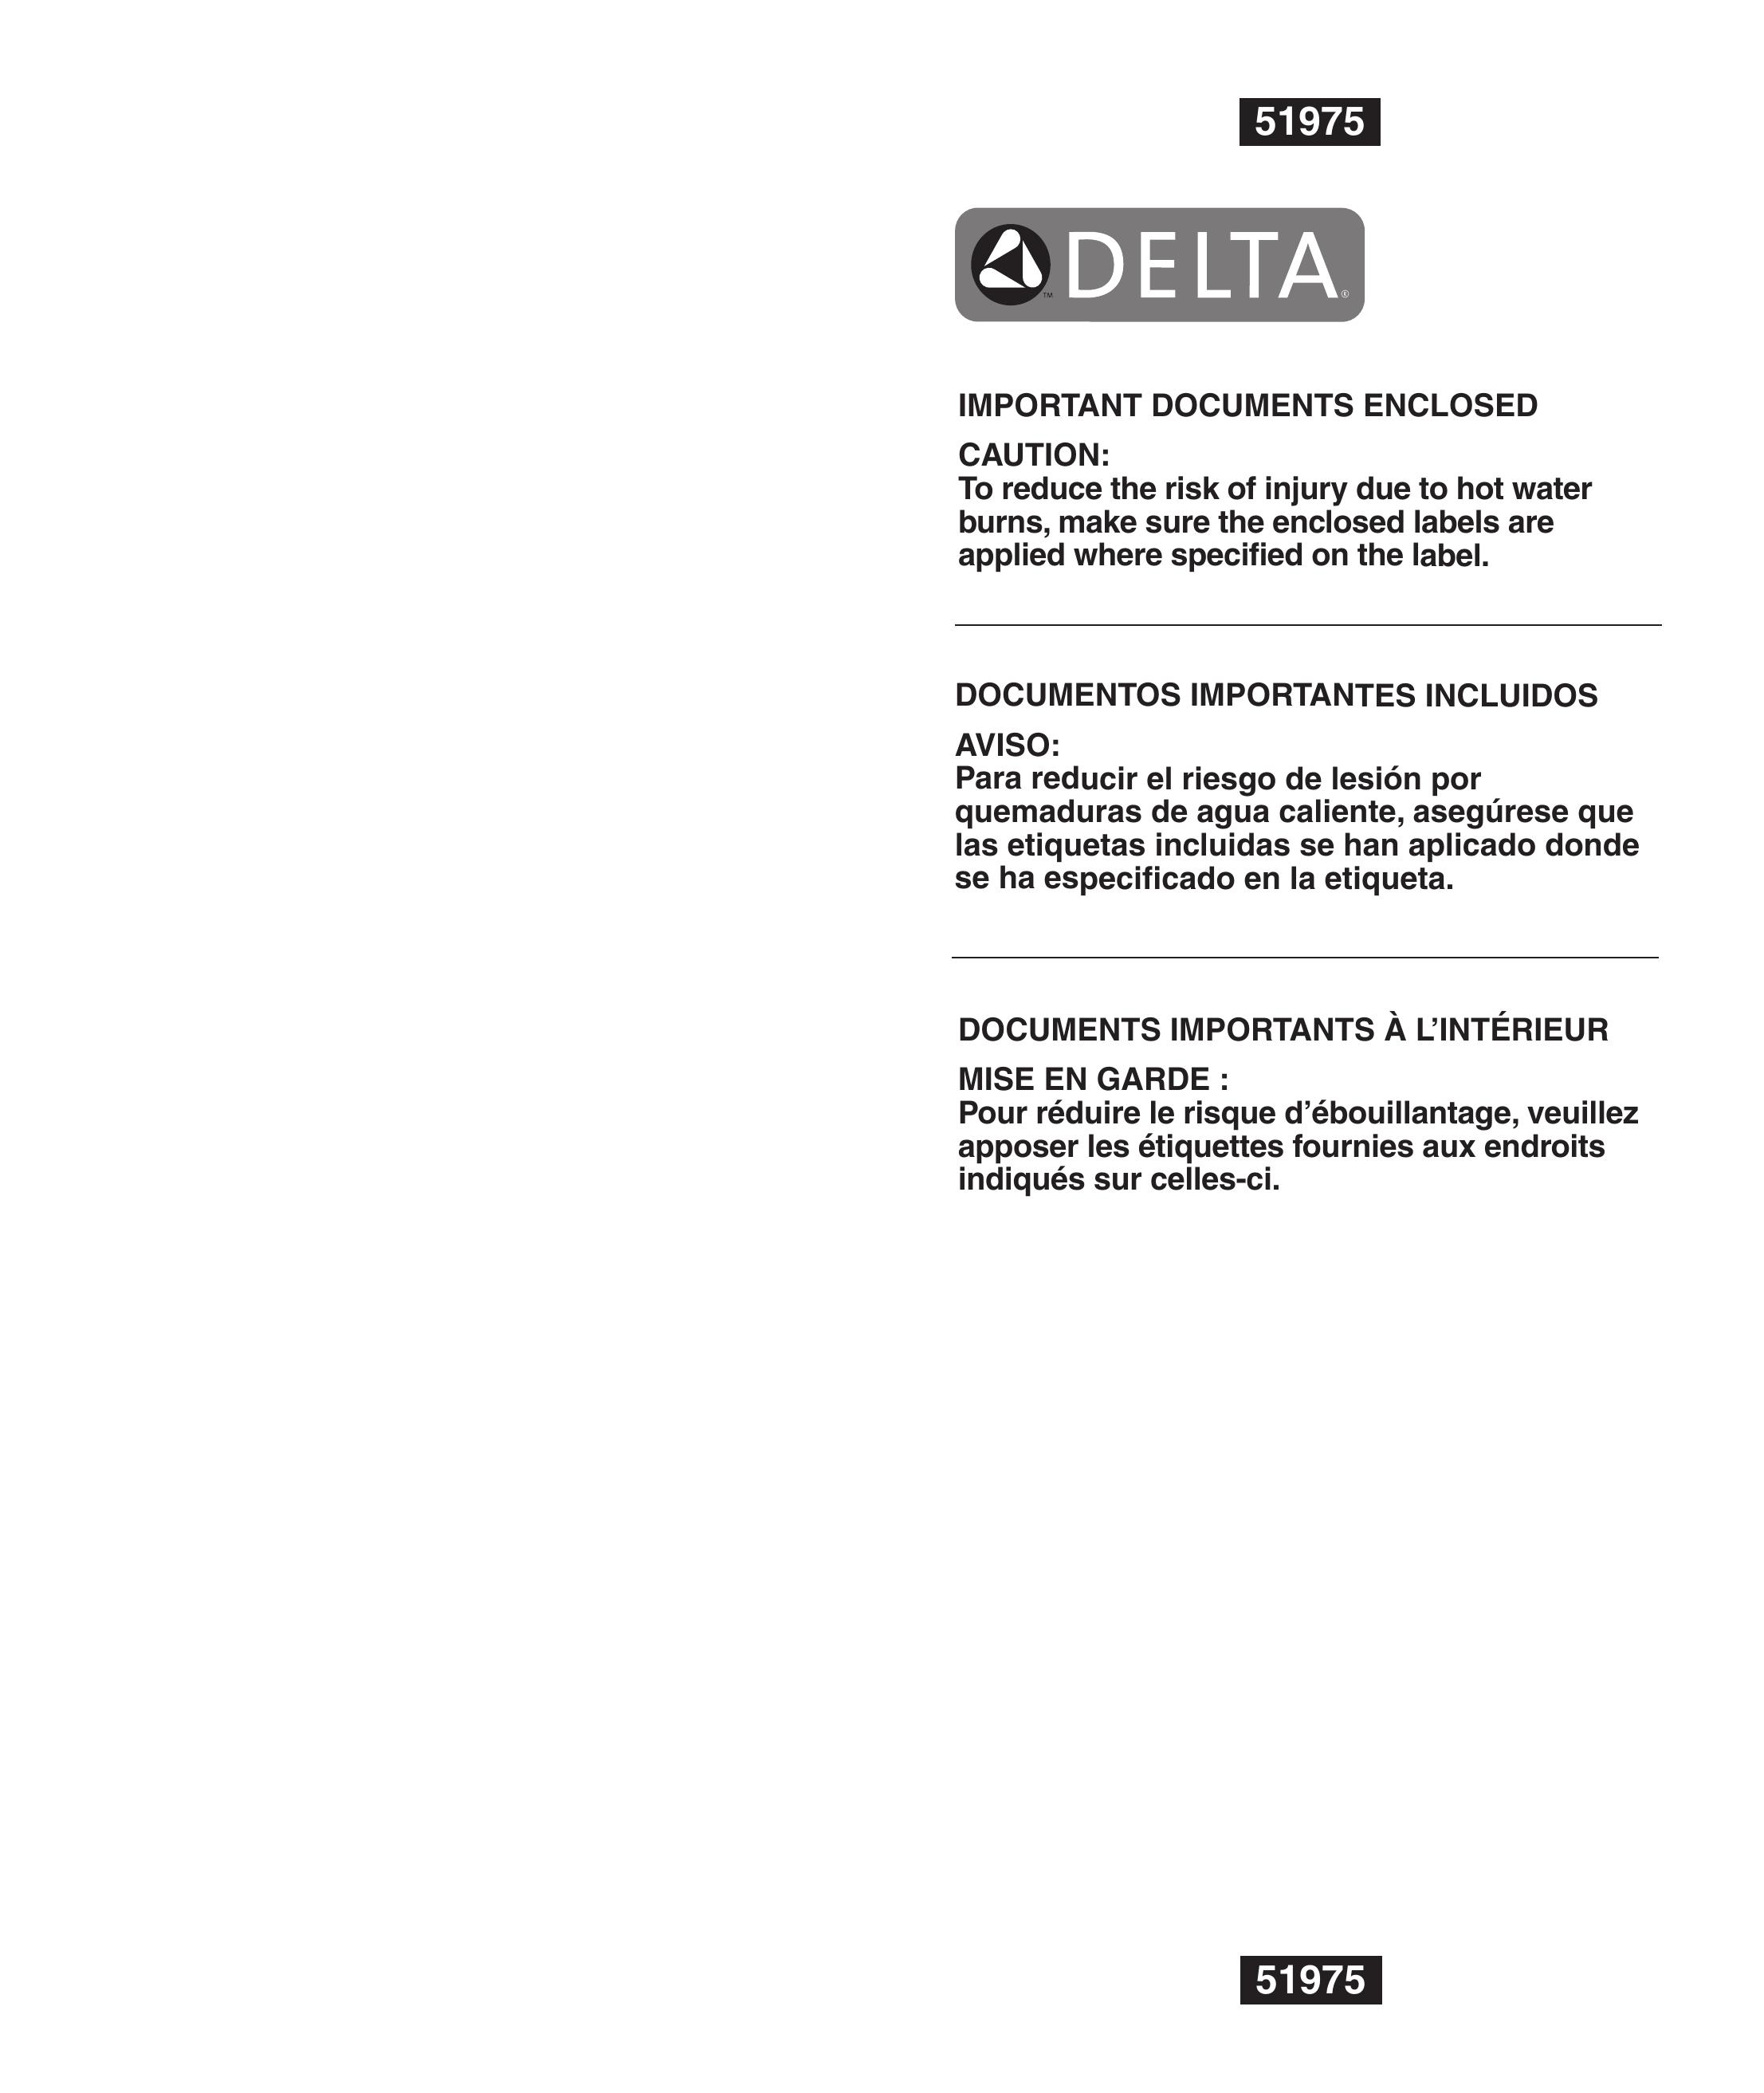 Delta RP61611s Hot Tub User Manual